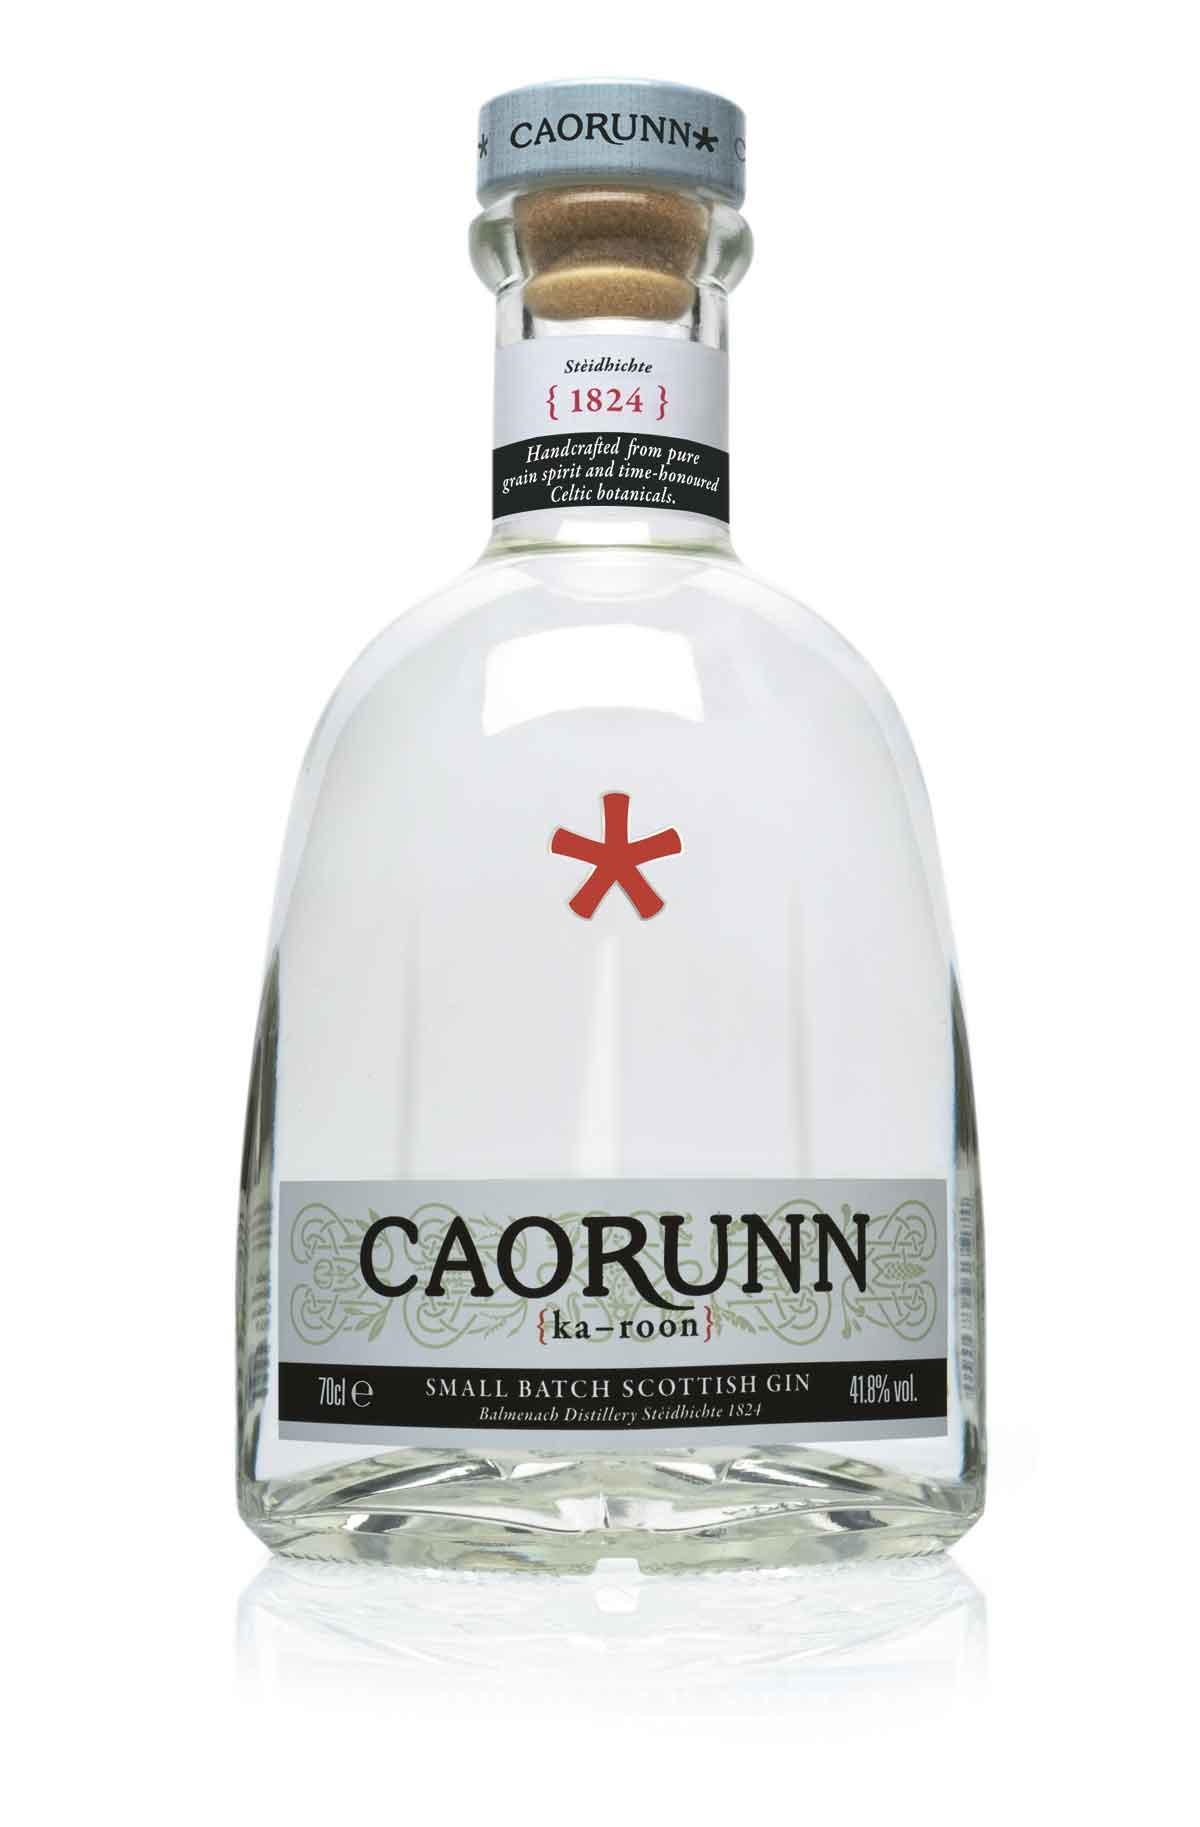 Caorunn Gin  70cl 41,8% Ecosse